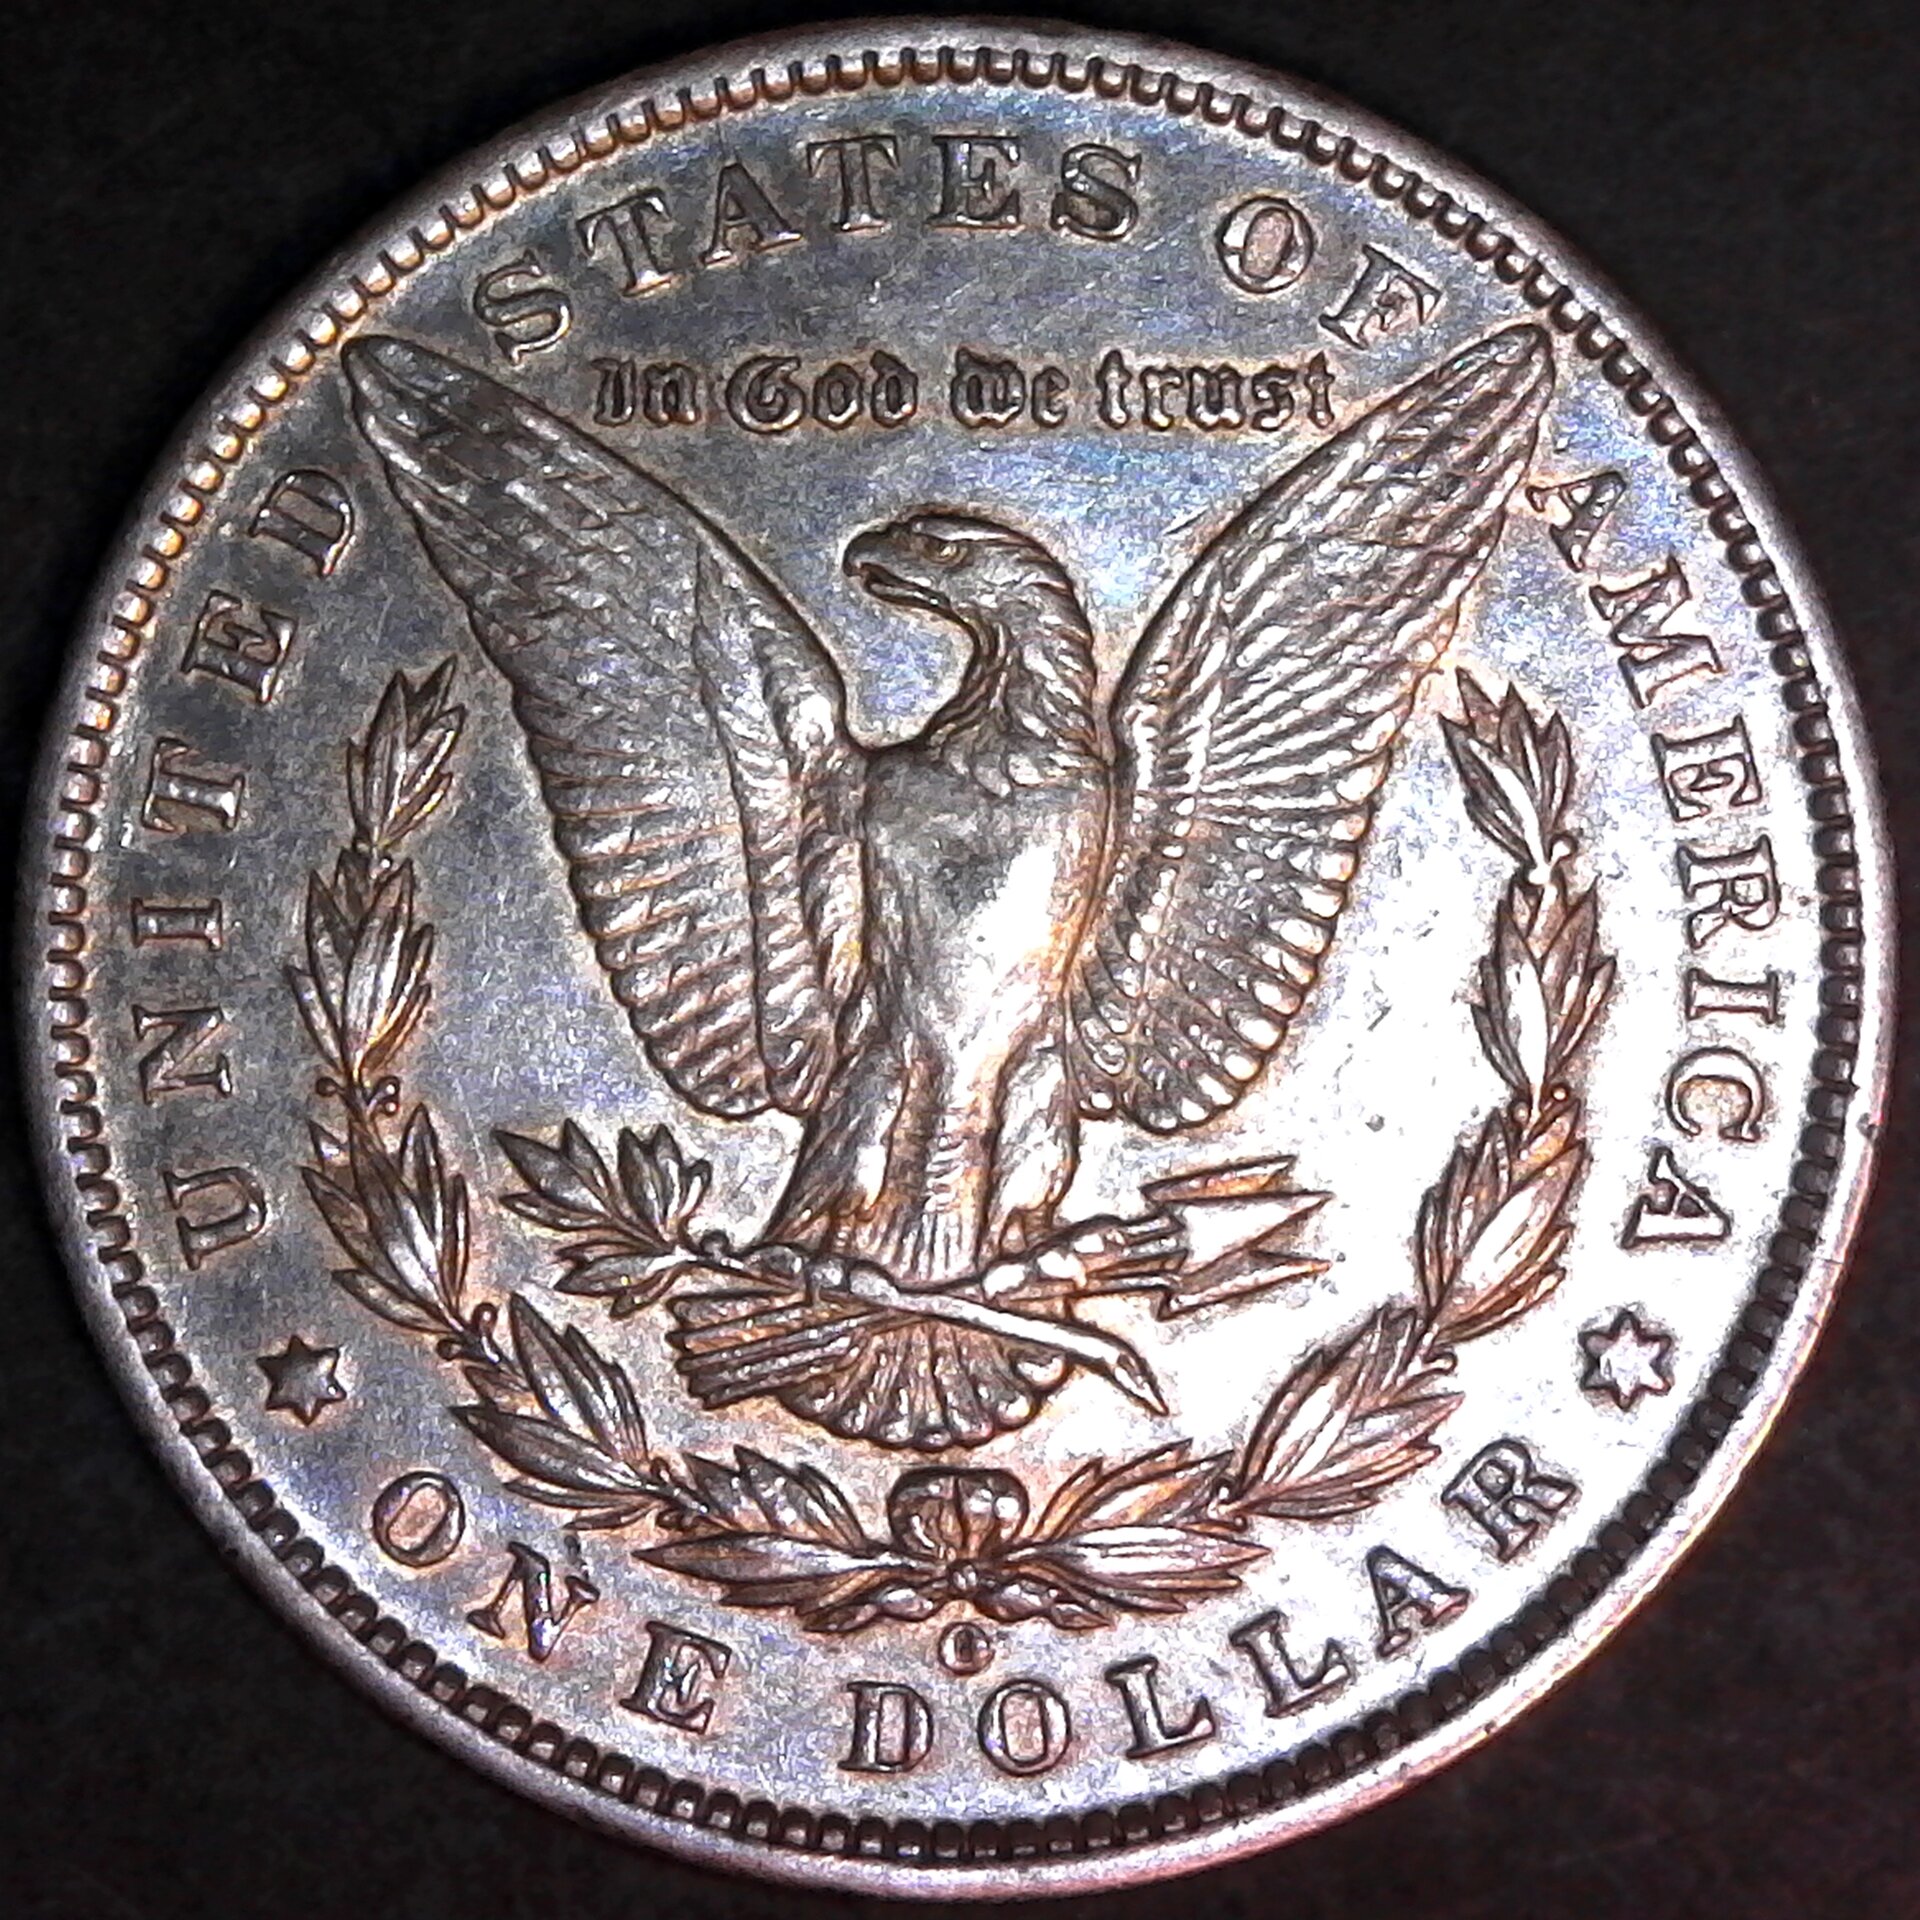 United States One Dollar 1890 O reverse.jpg